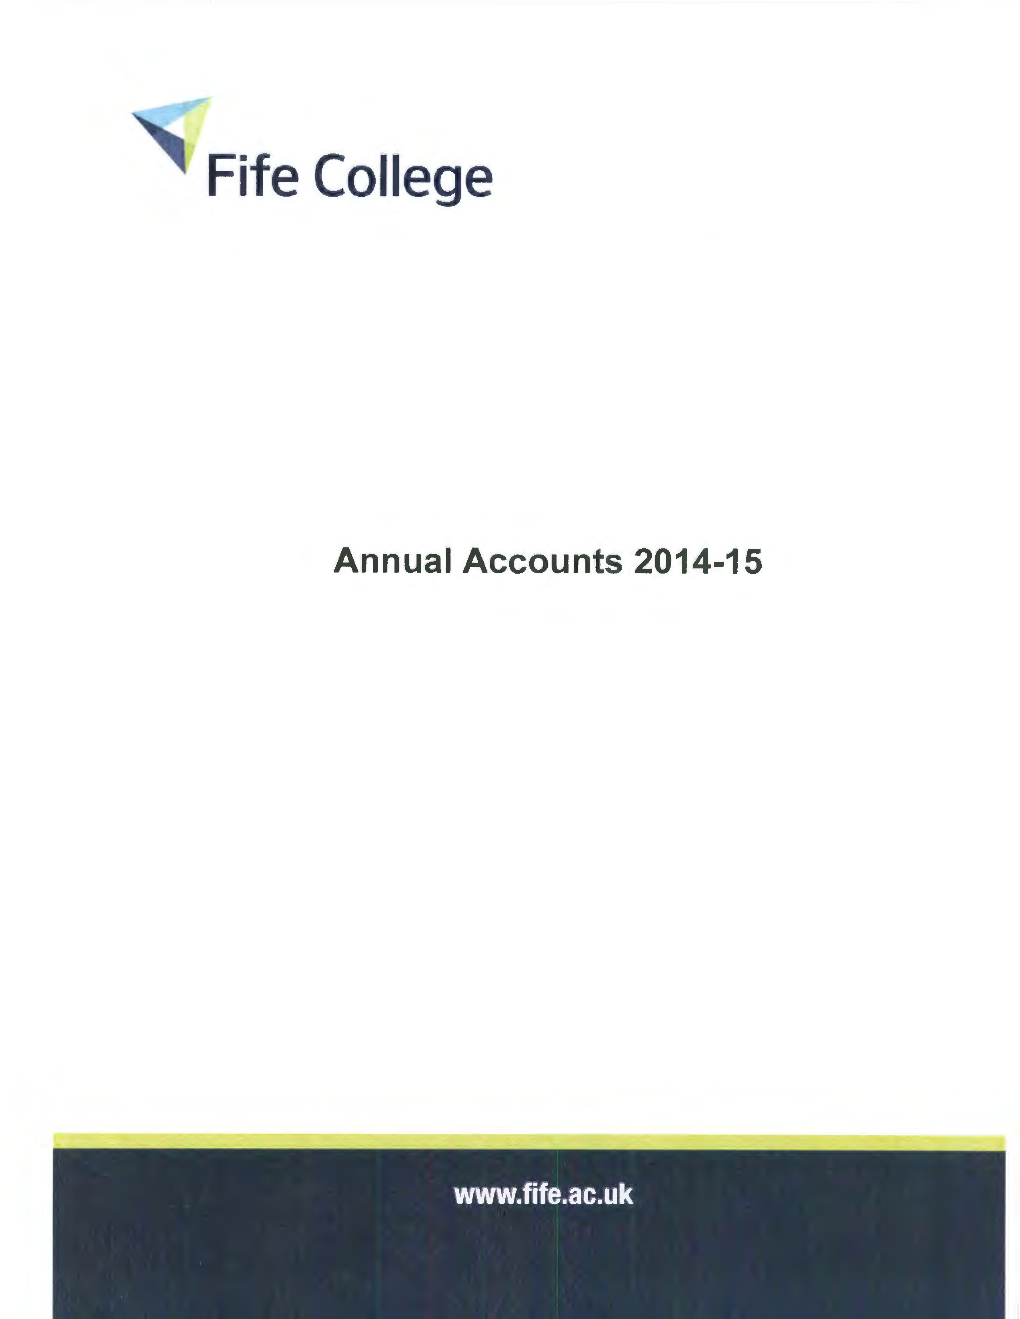 Annual Accounts 2014/2015